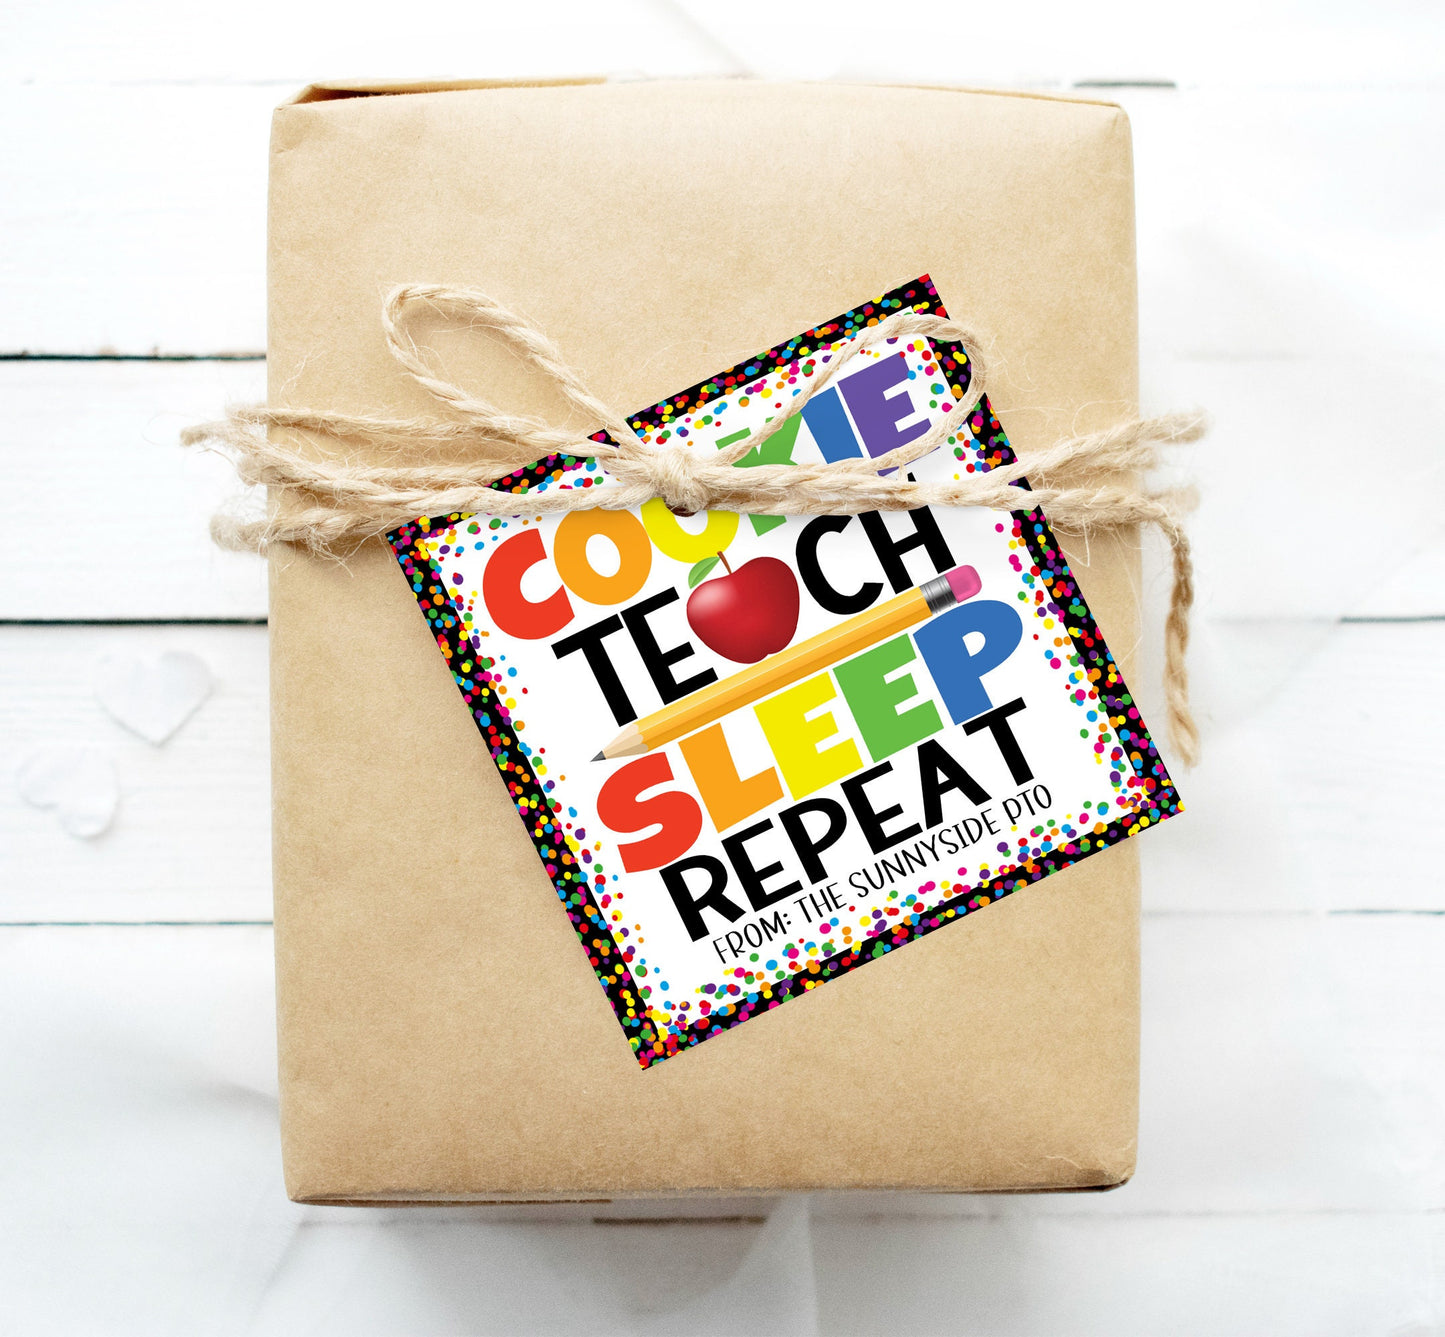 Back To School Teacher Gift Tag, Cookie Teach Sleep Repeat, Appreciation Gift For Teachers School PTO PTA, Chocolate Chip Editable Printable